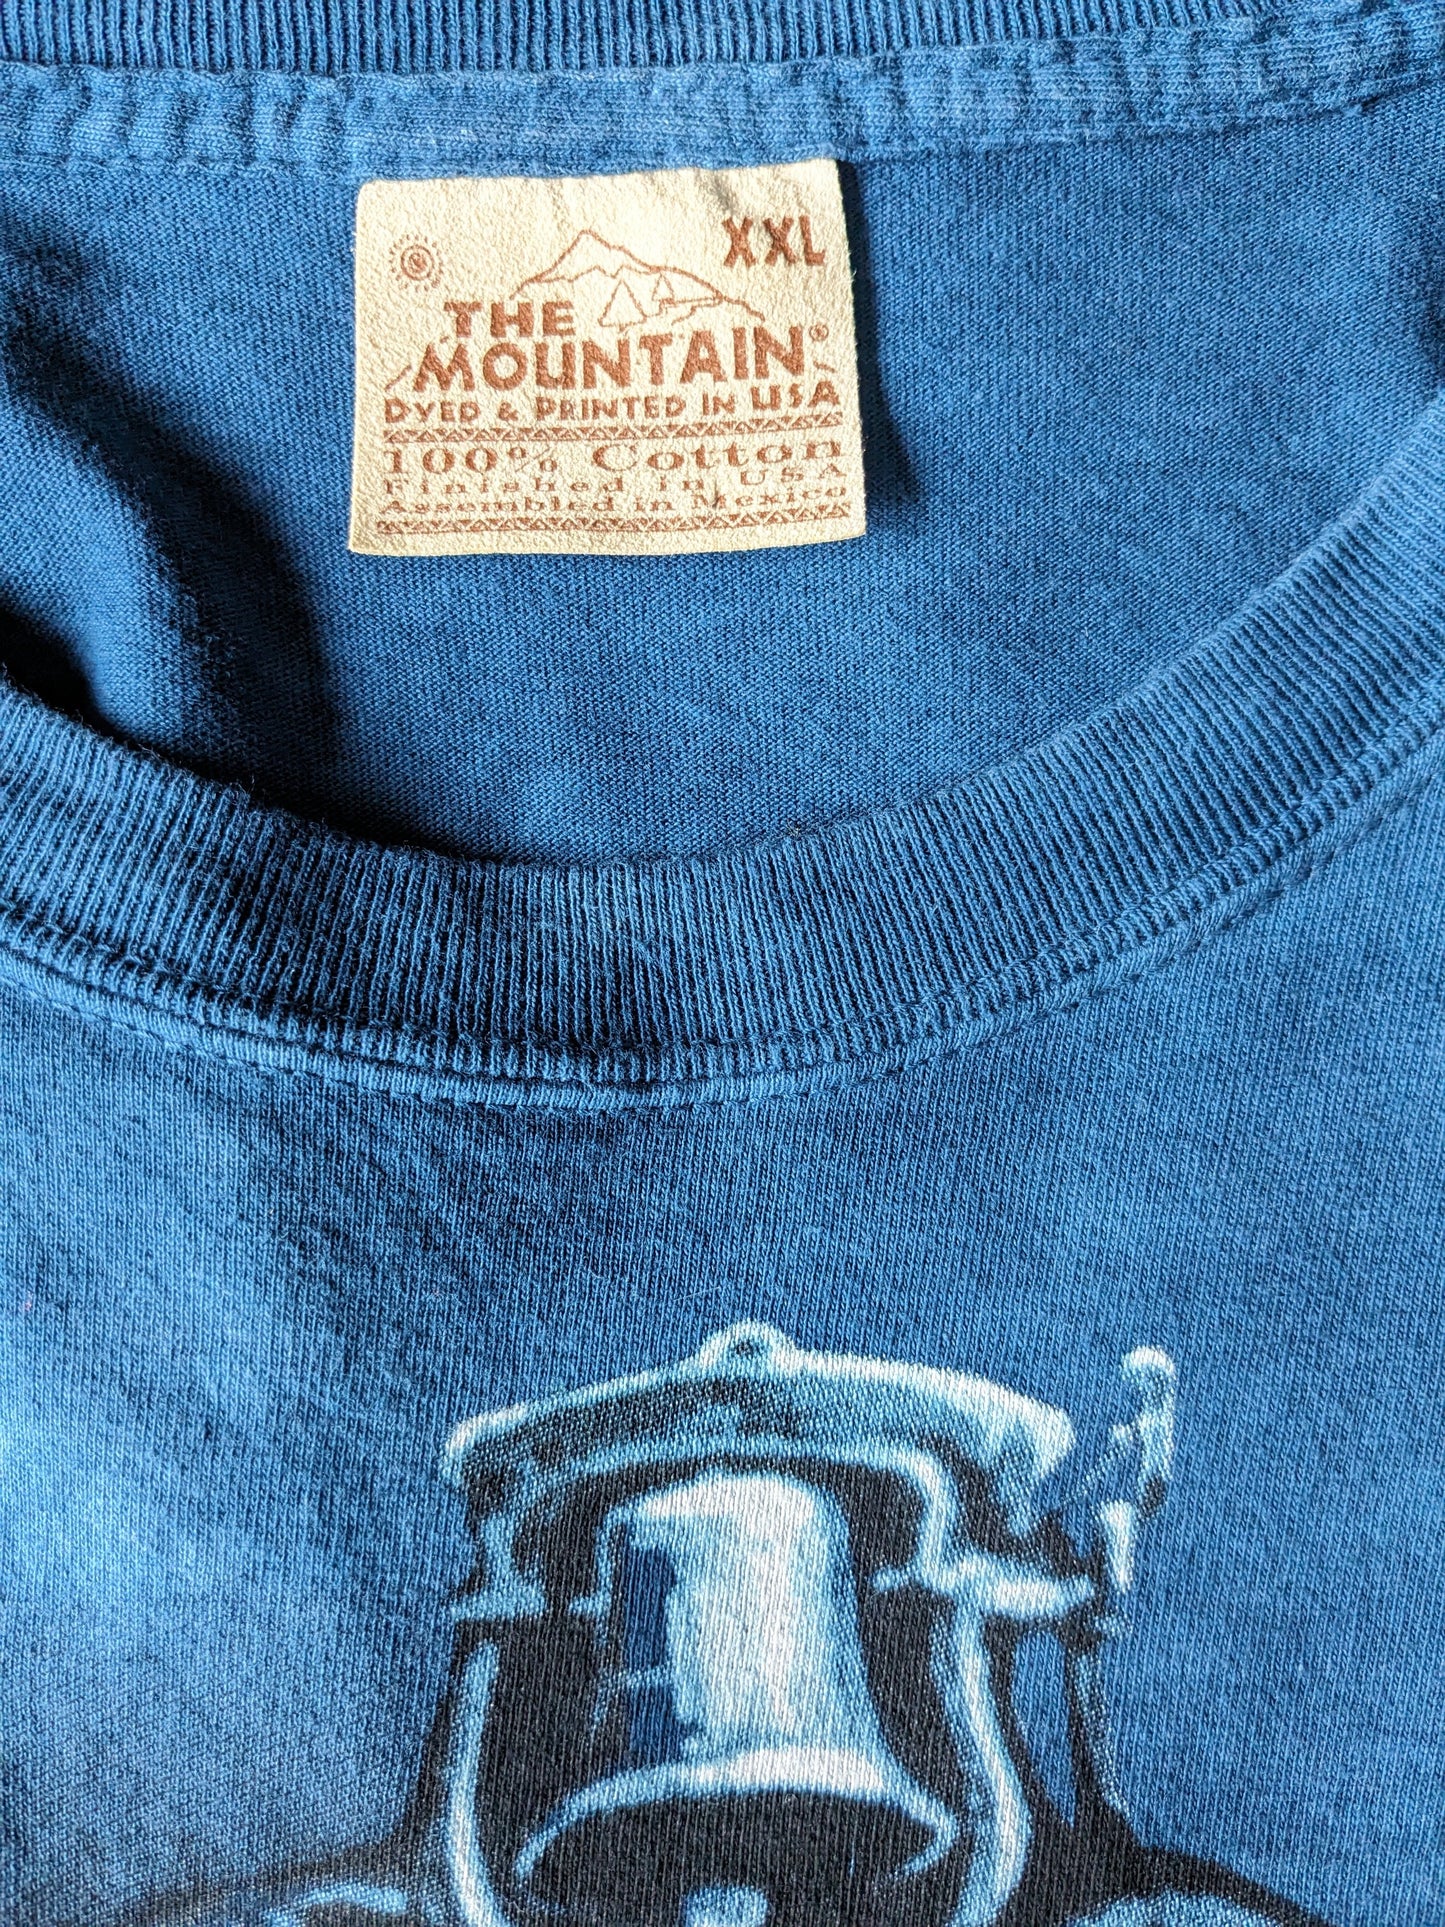 The Mountain shirt. Dark blue with locomotive print. Size 2XL / XXL.